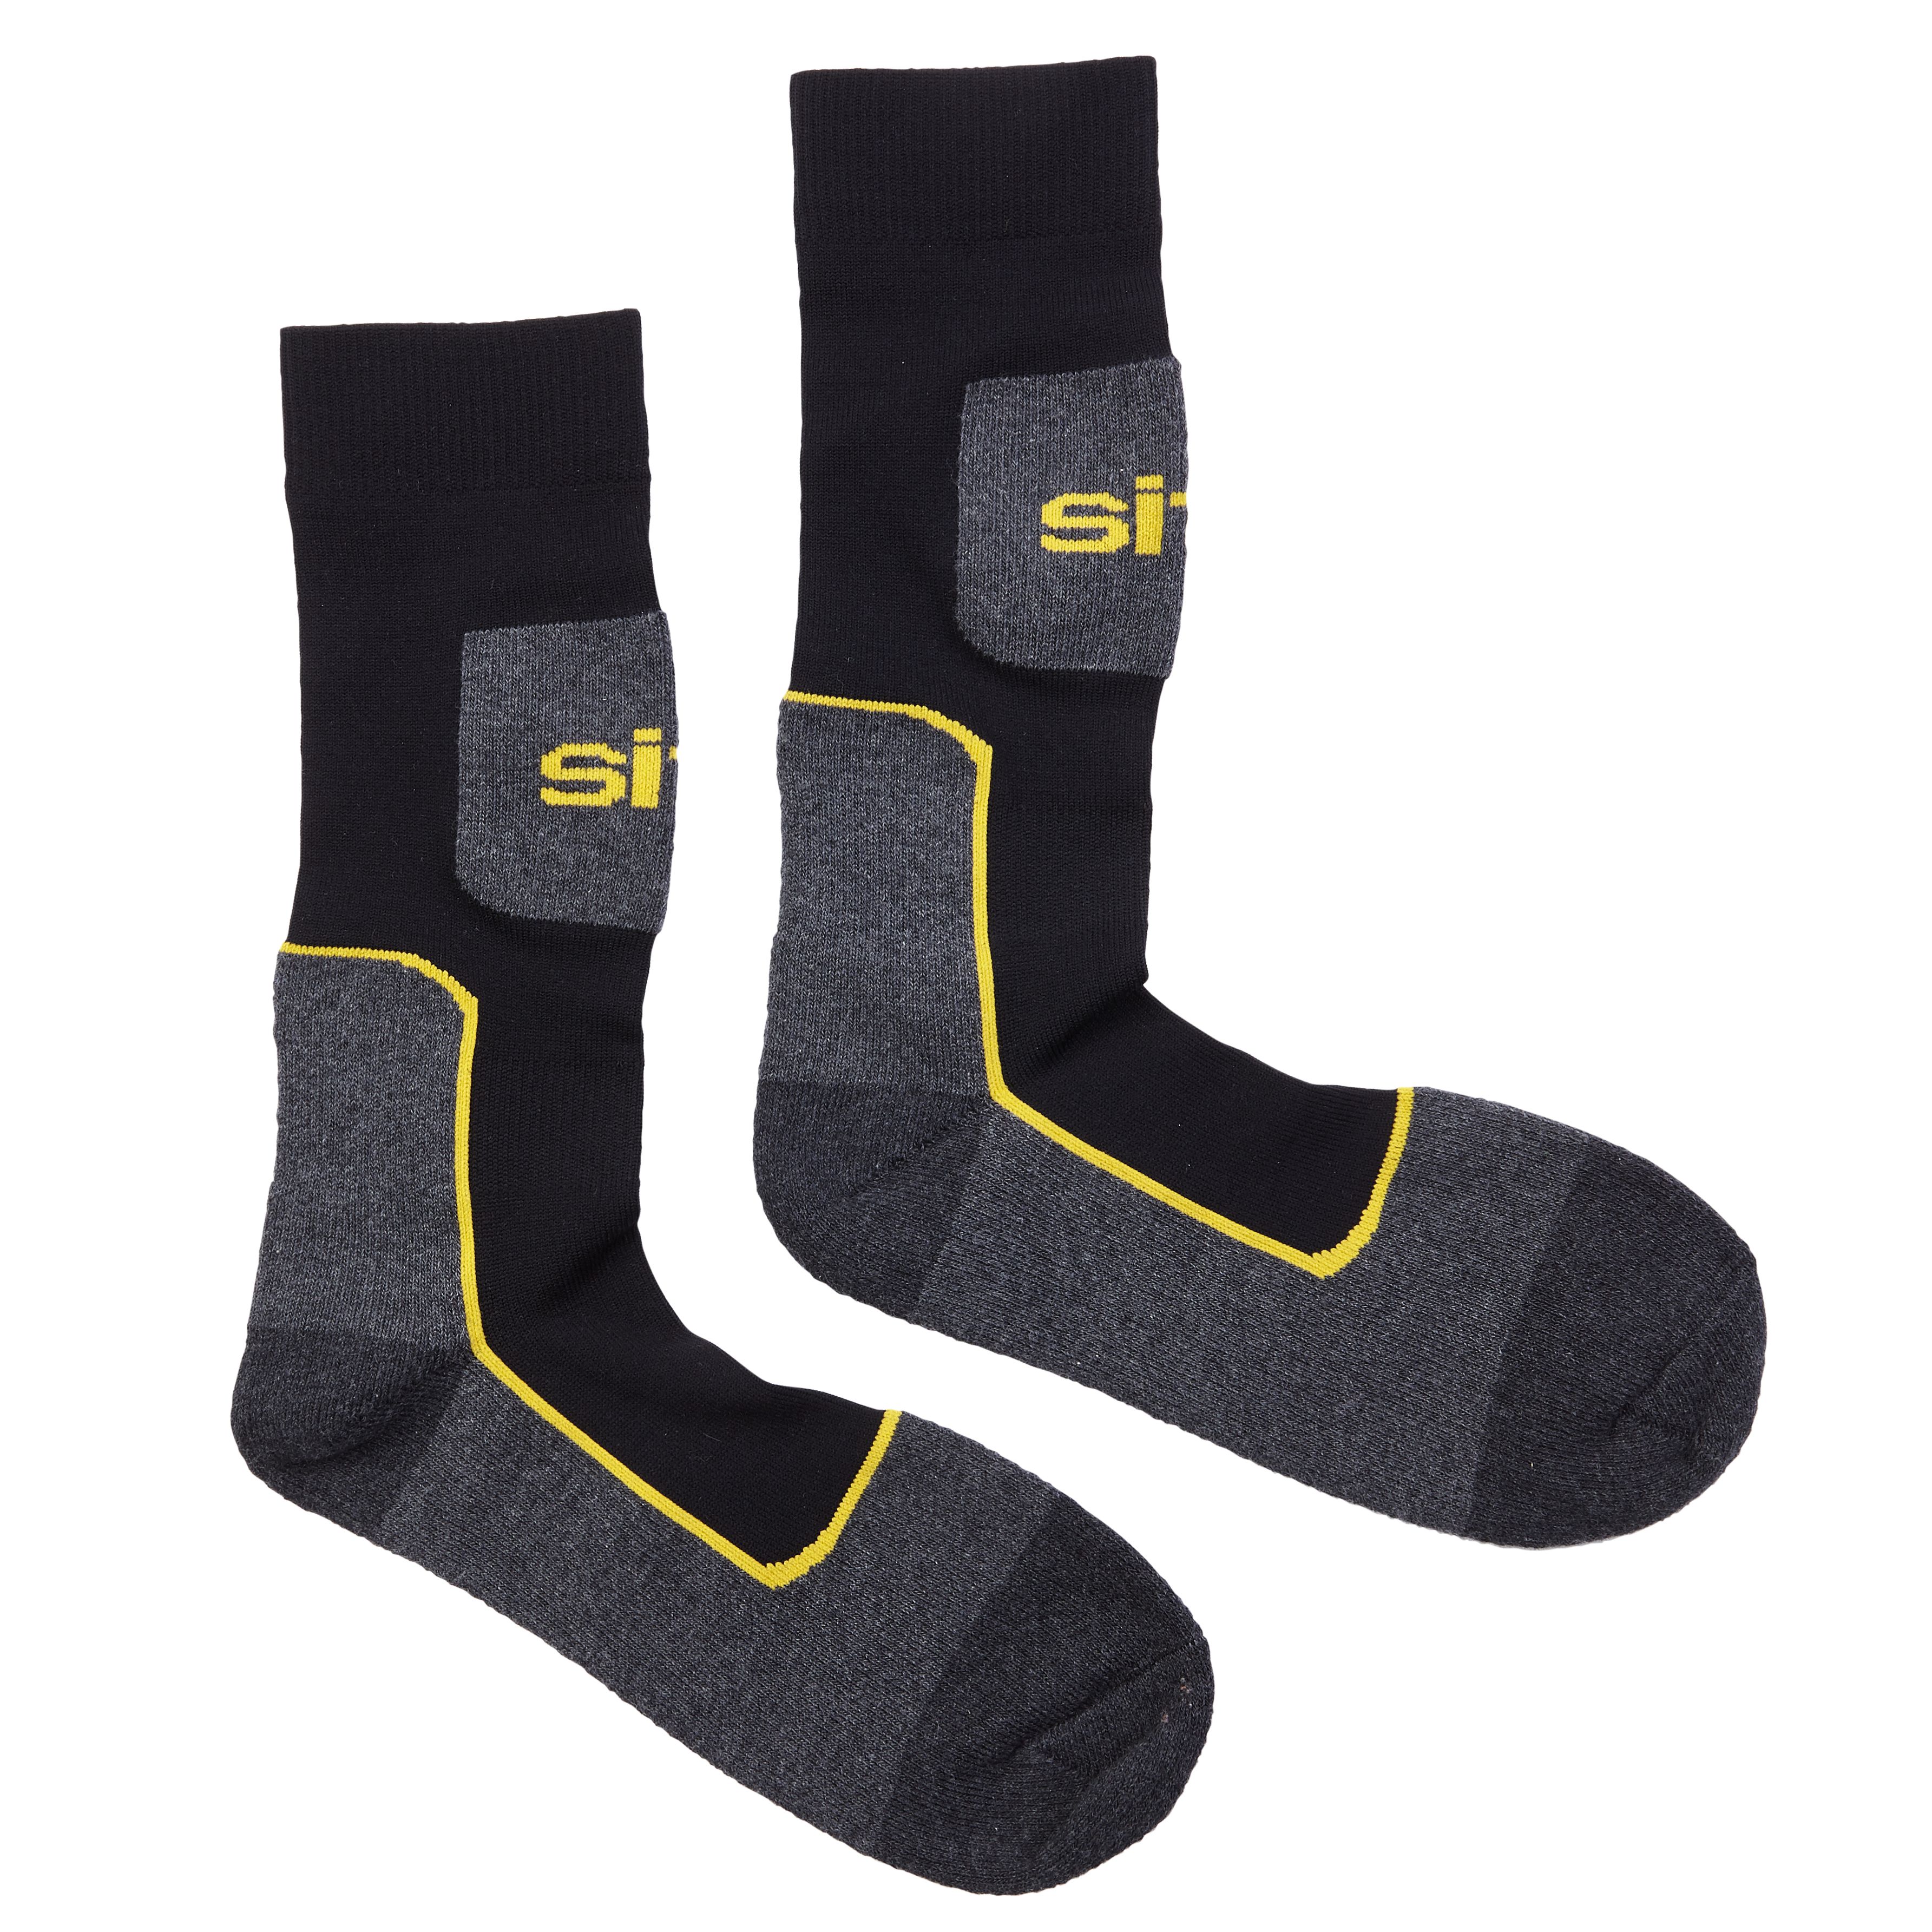 Black & grey Socks Size 7-11, 3 Sets